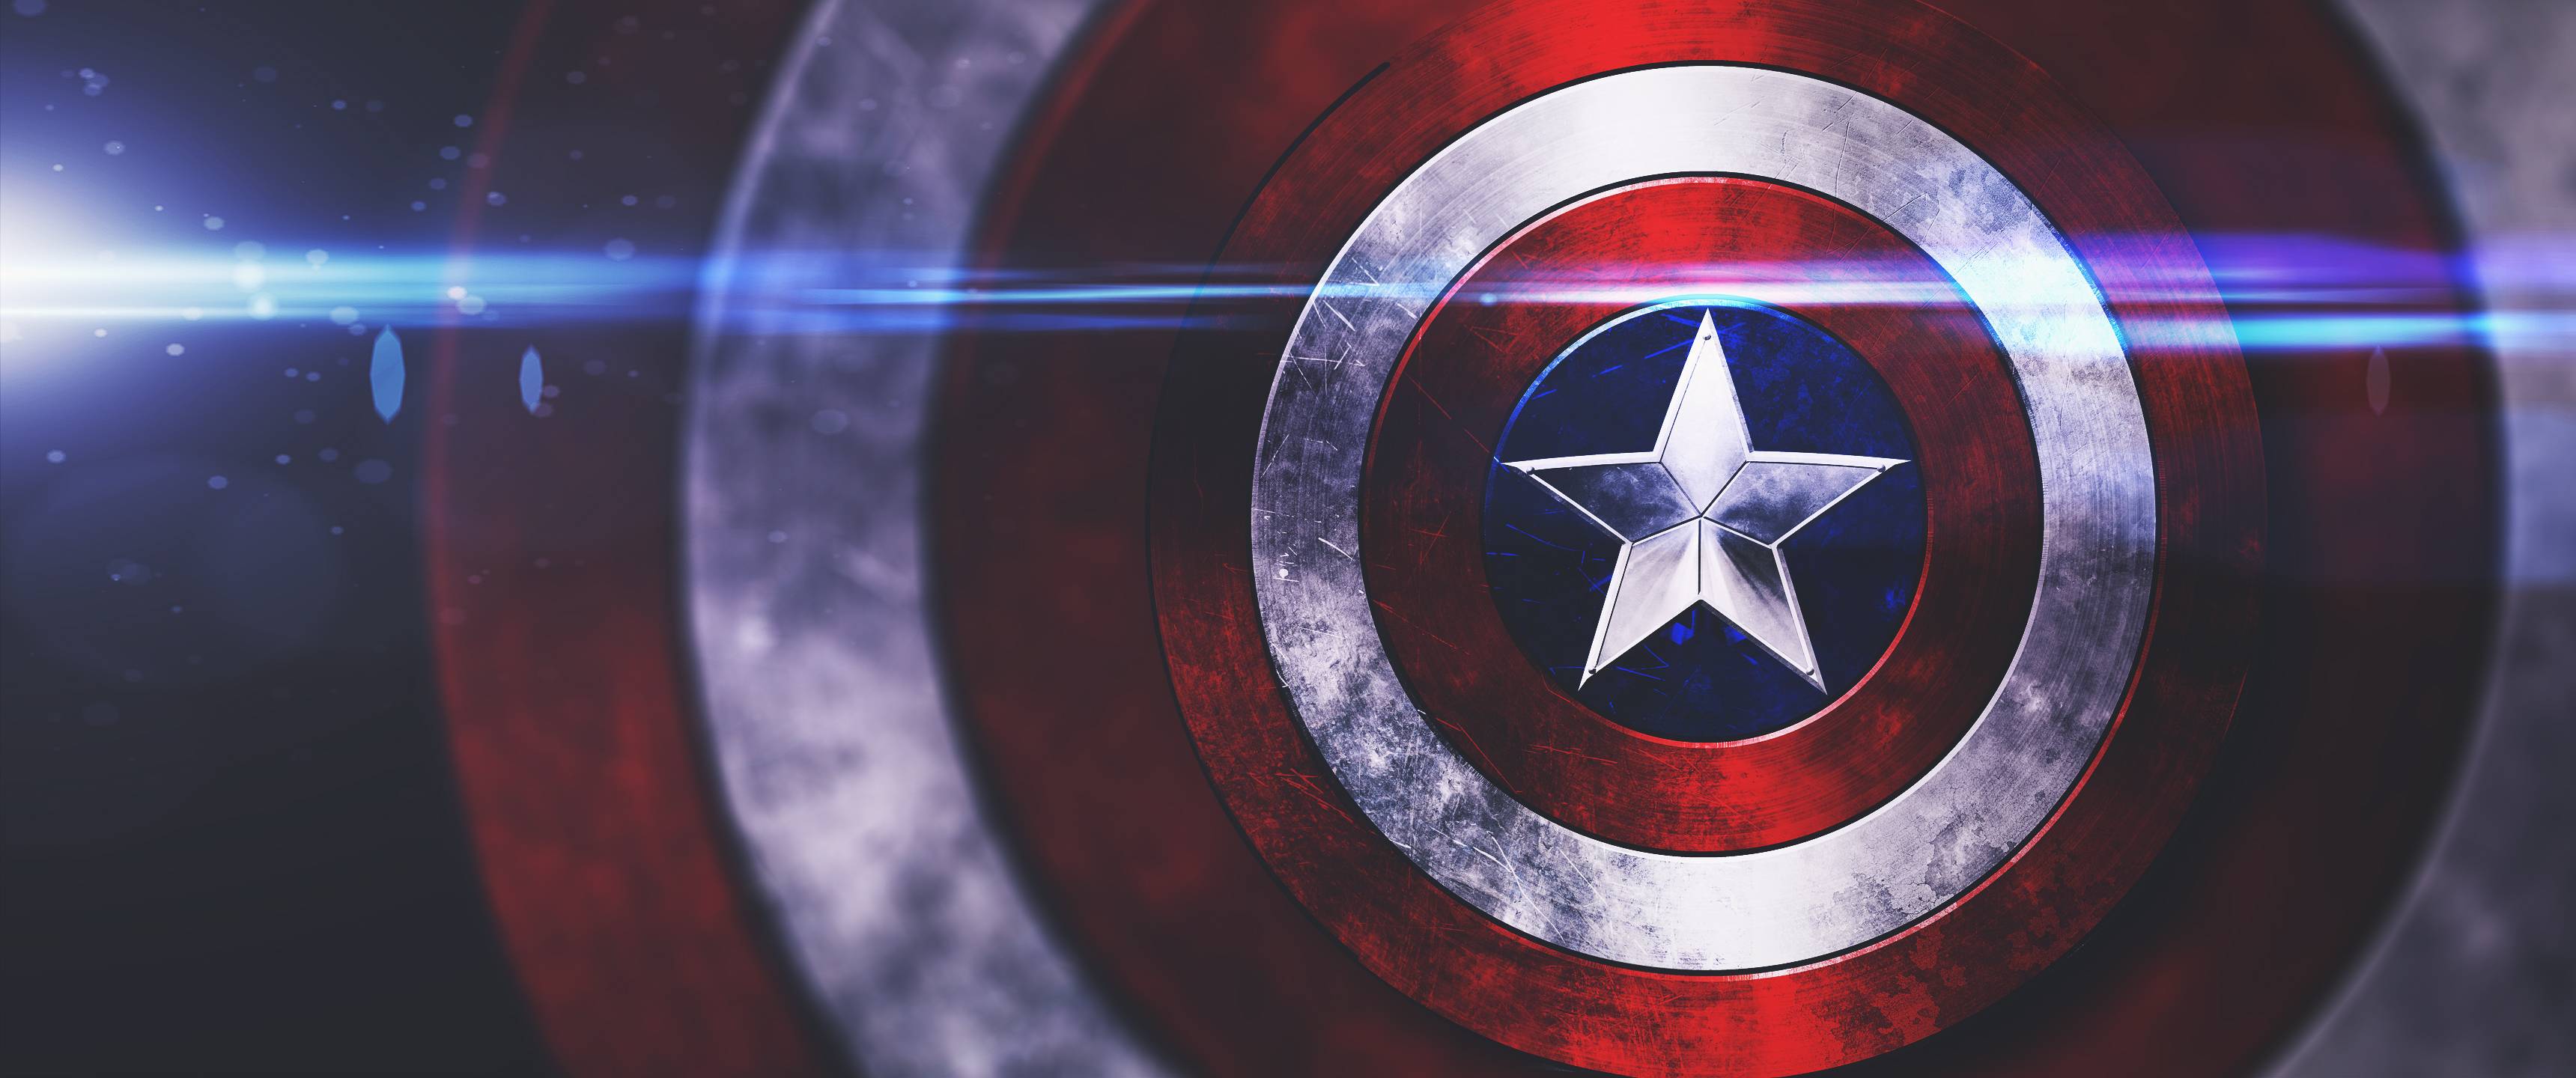 Captain America shield wallpaper I made in PS. 3440x1440